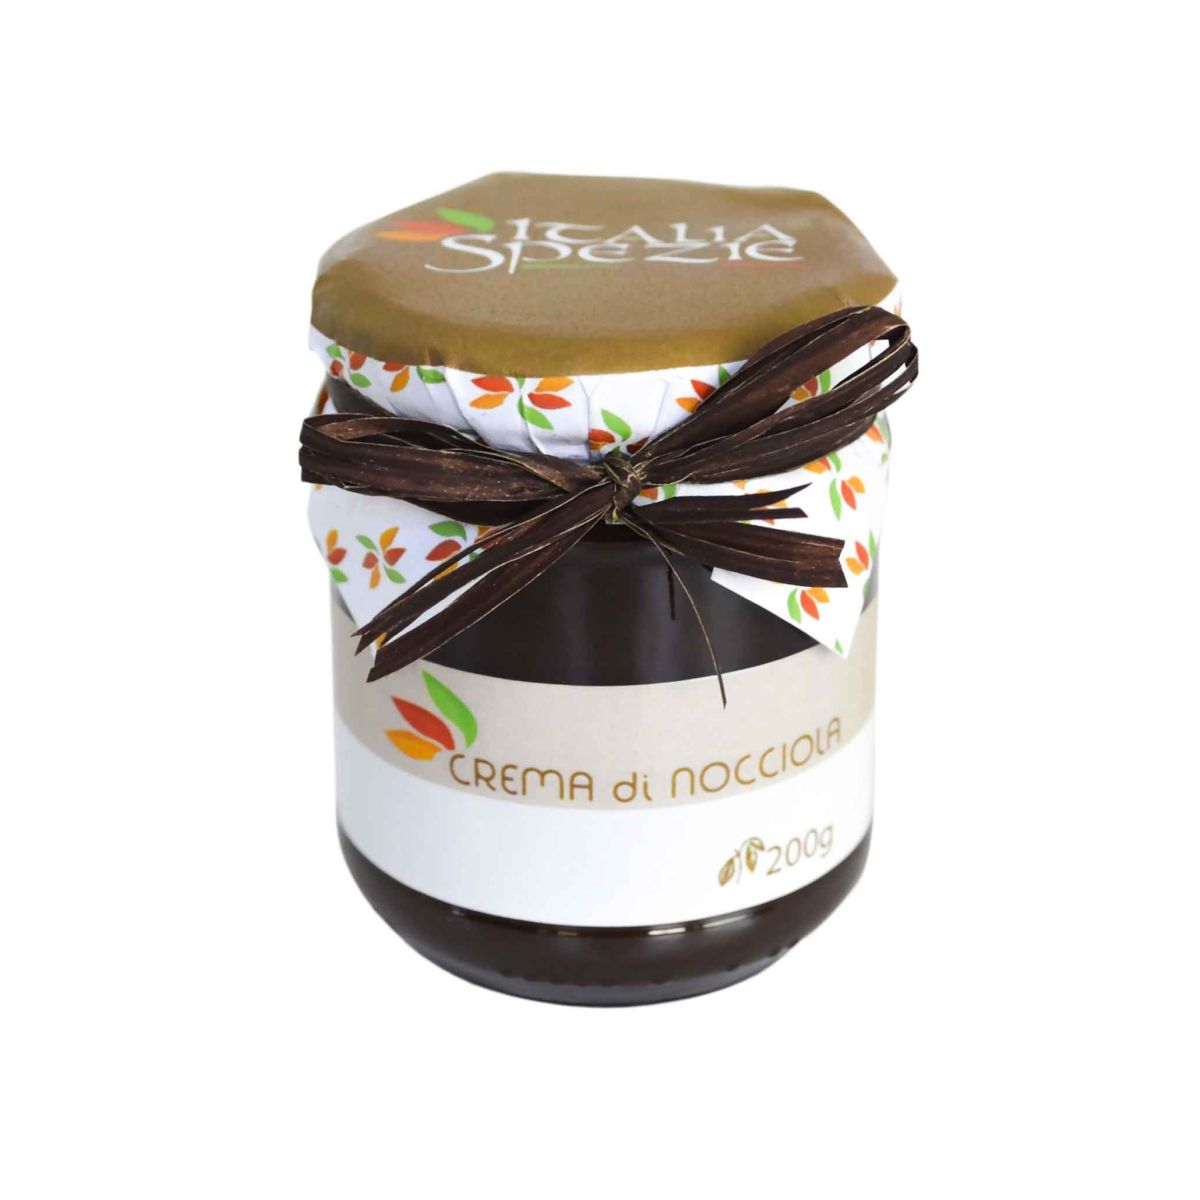 Crema spalmabile gusto Nocciola - 200g